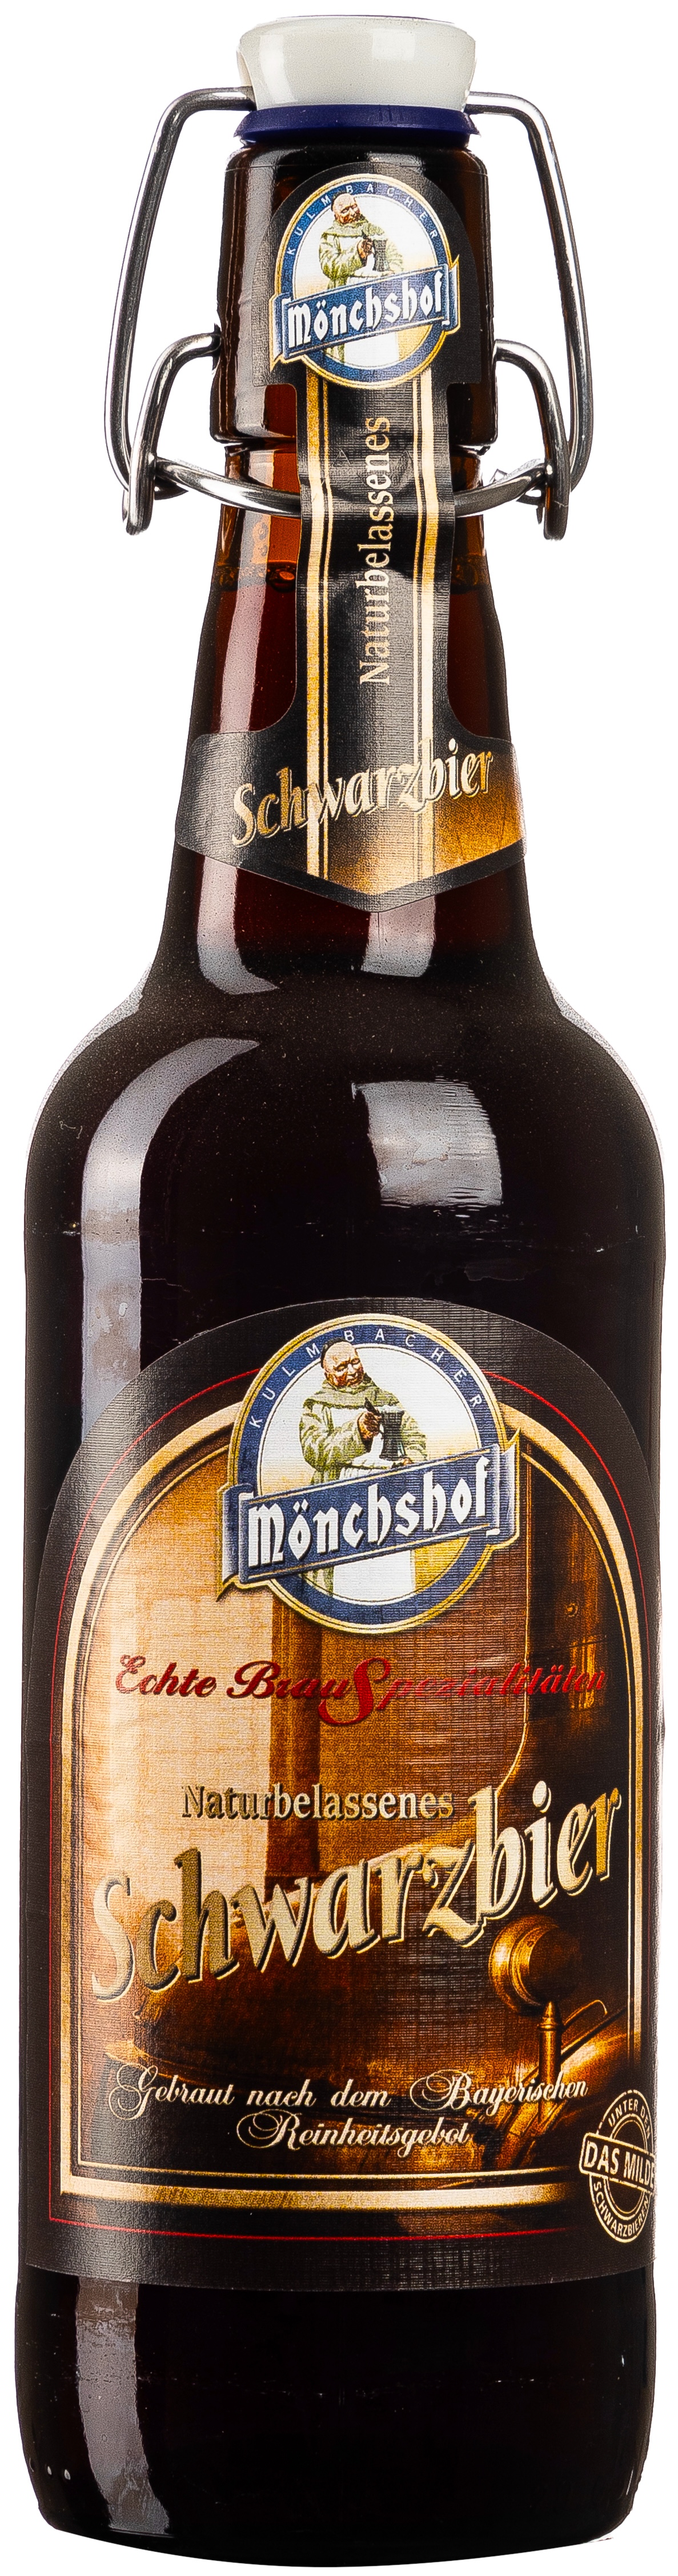 Mönchshof Schwarzbier 0,5L MEHRWEG